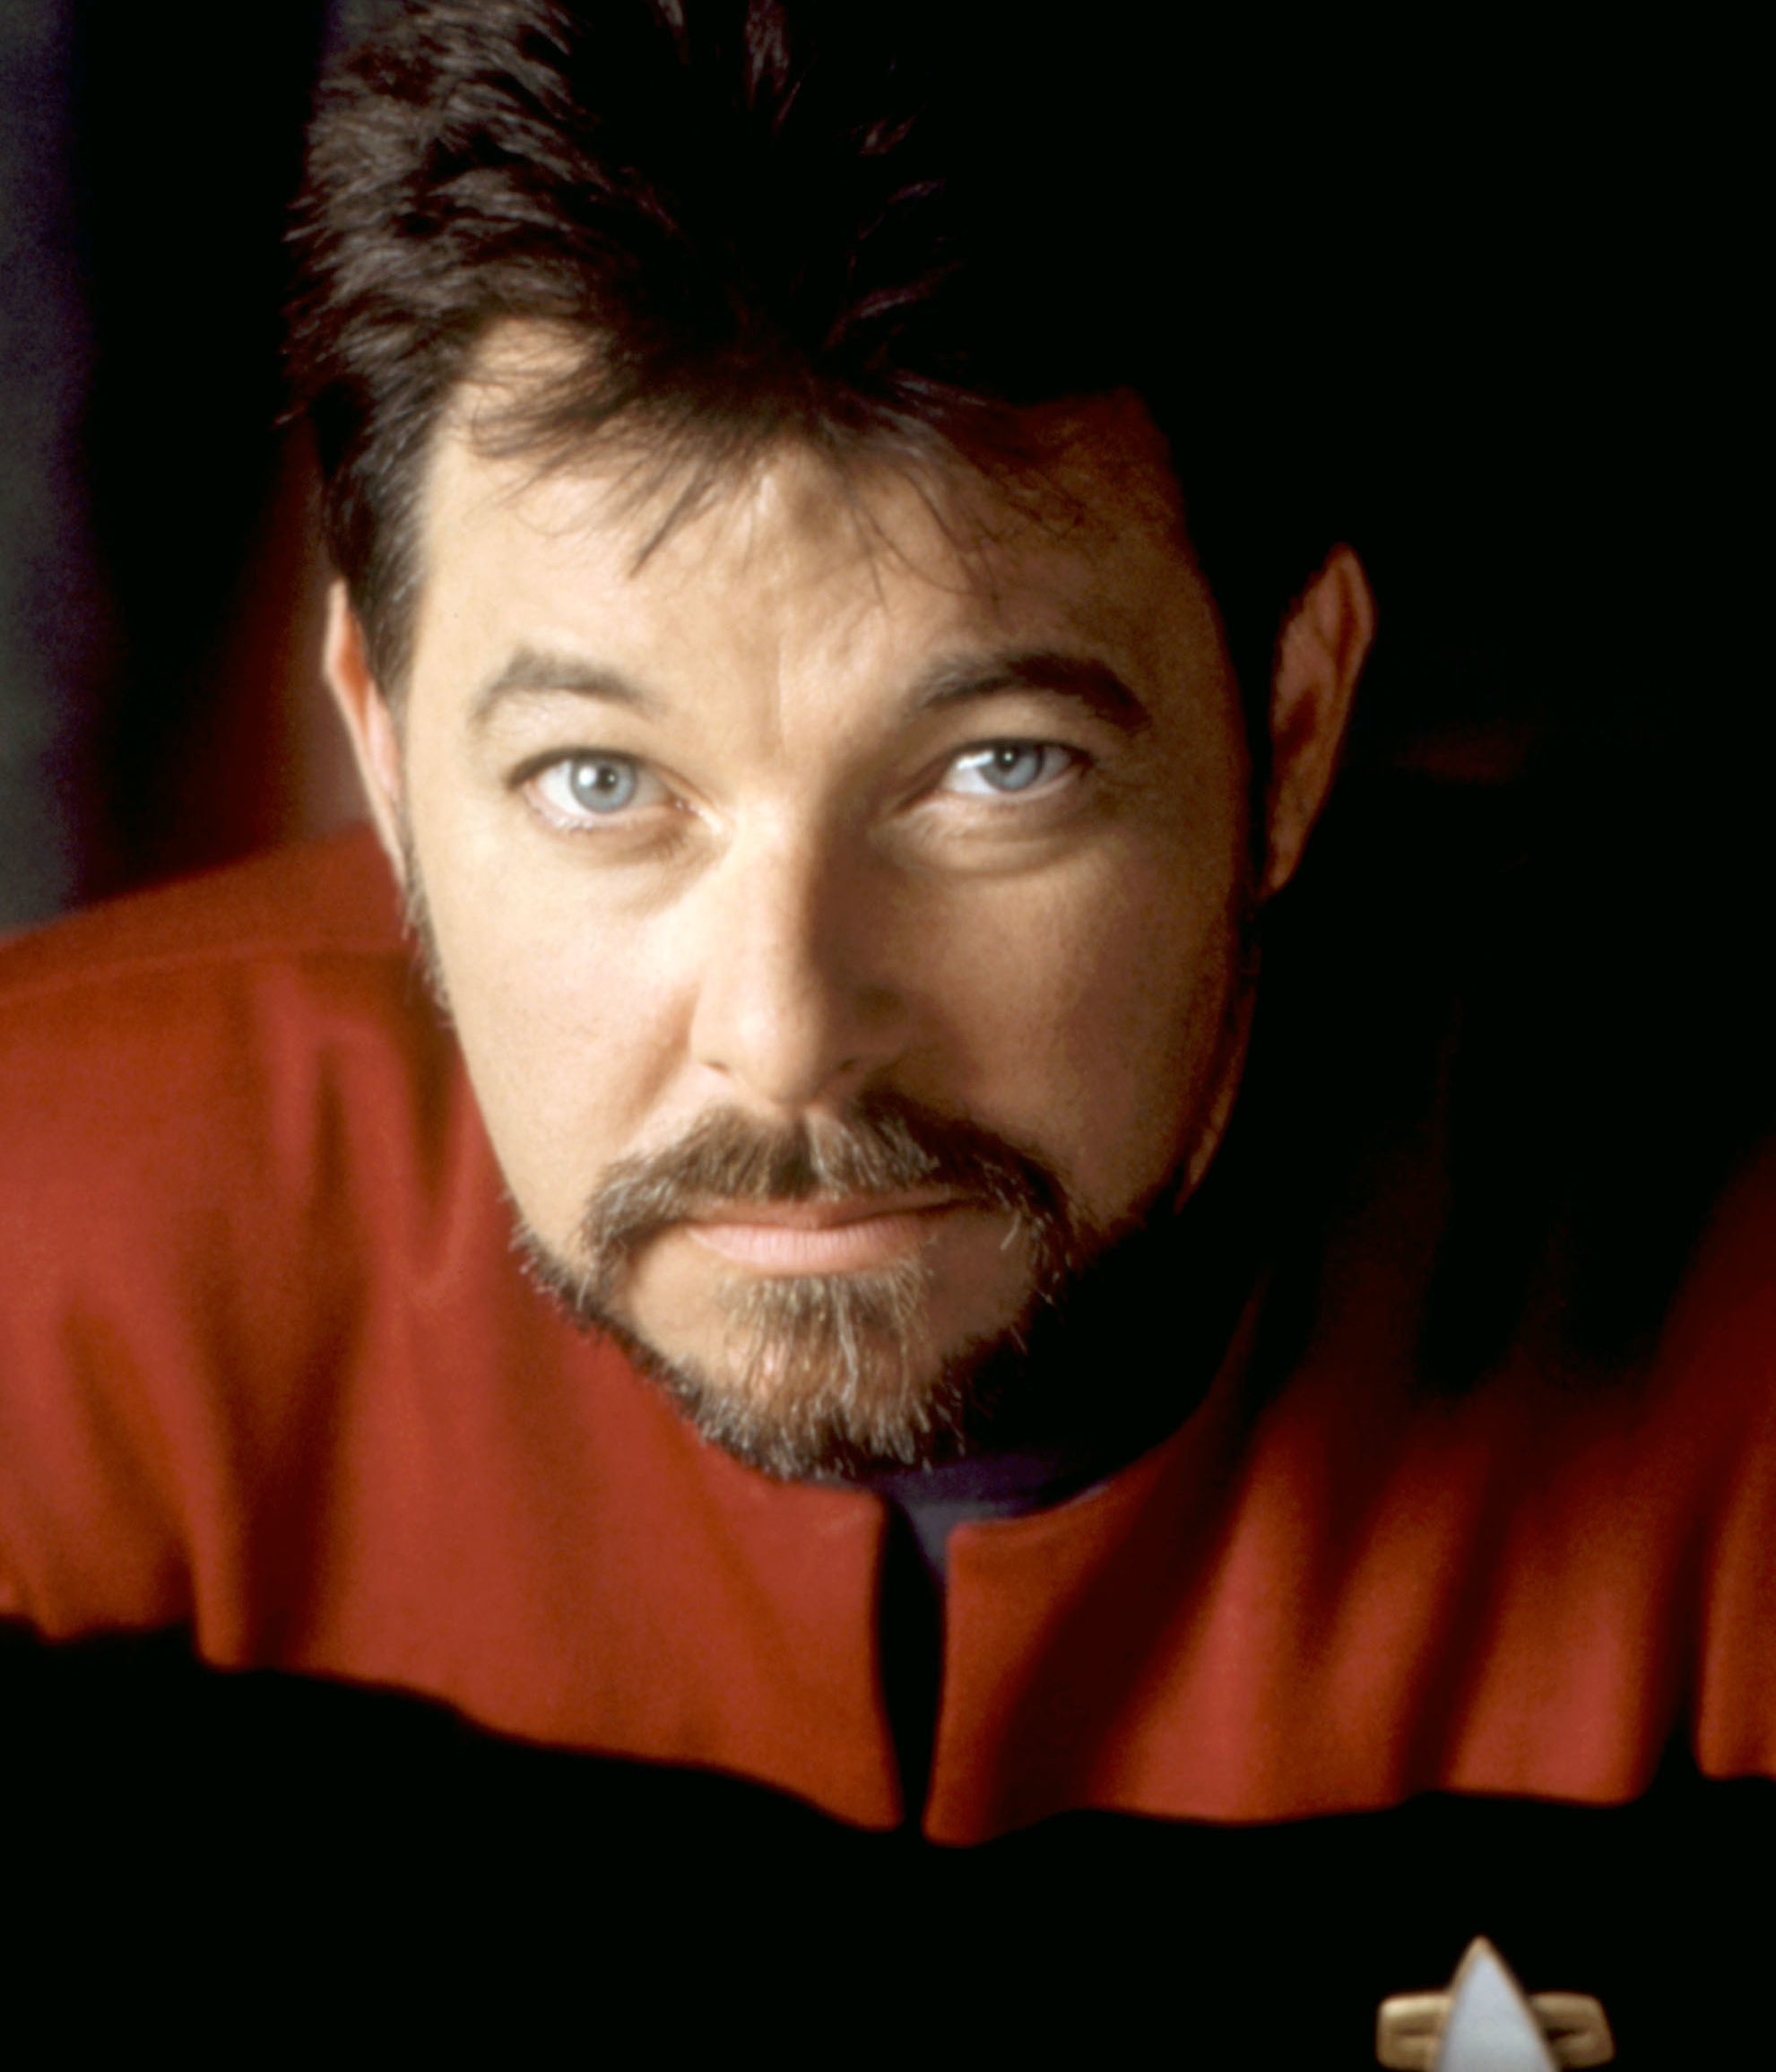 Closeup of Riker